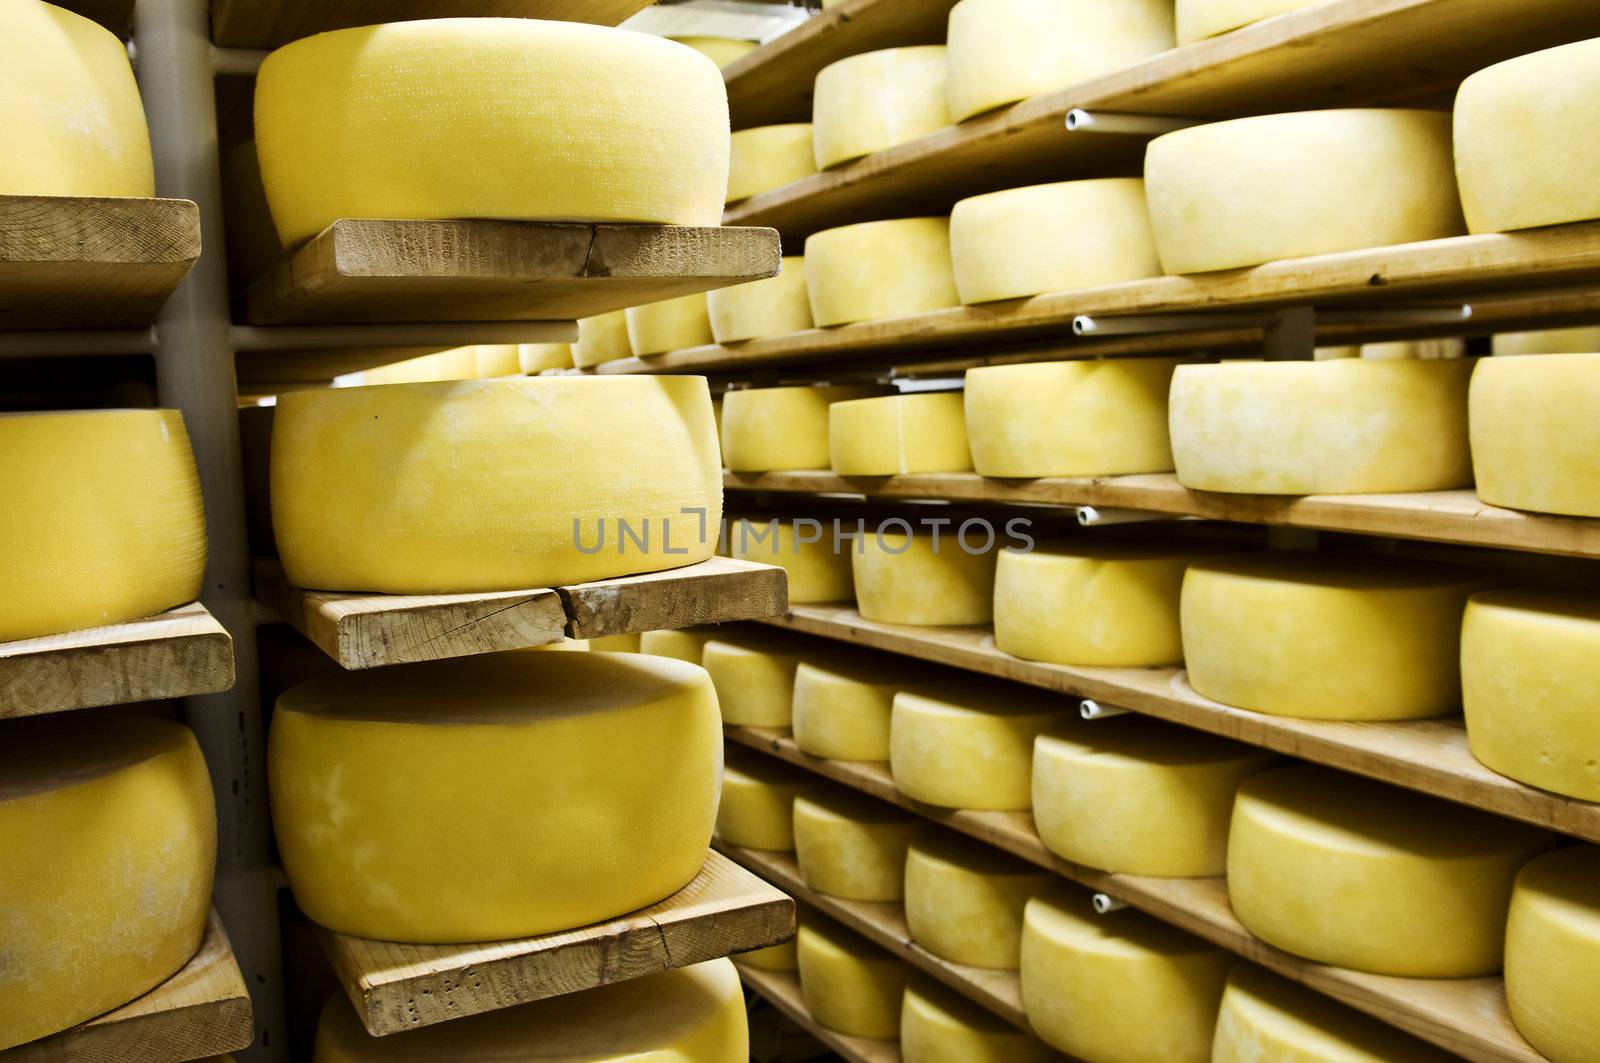 Cheese in shelf by mrfotos